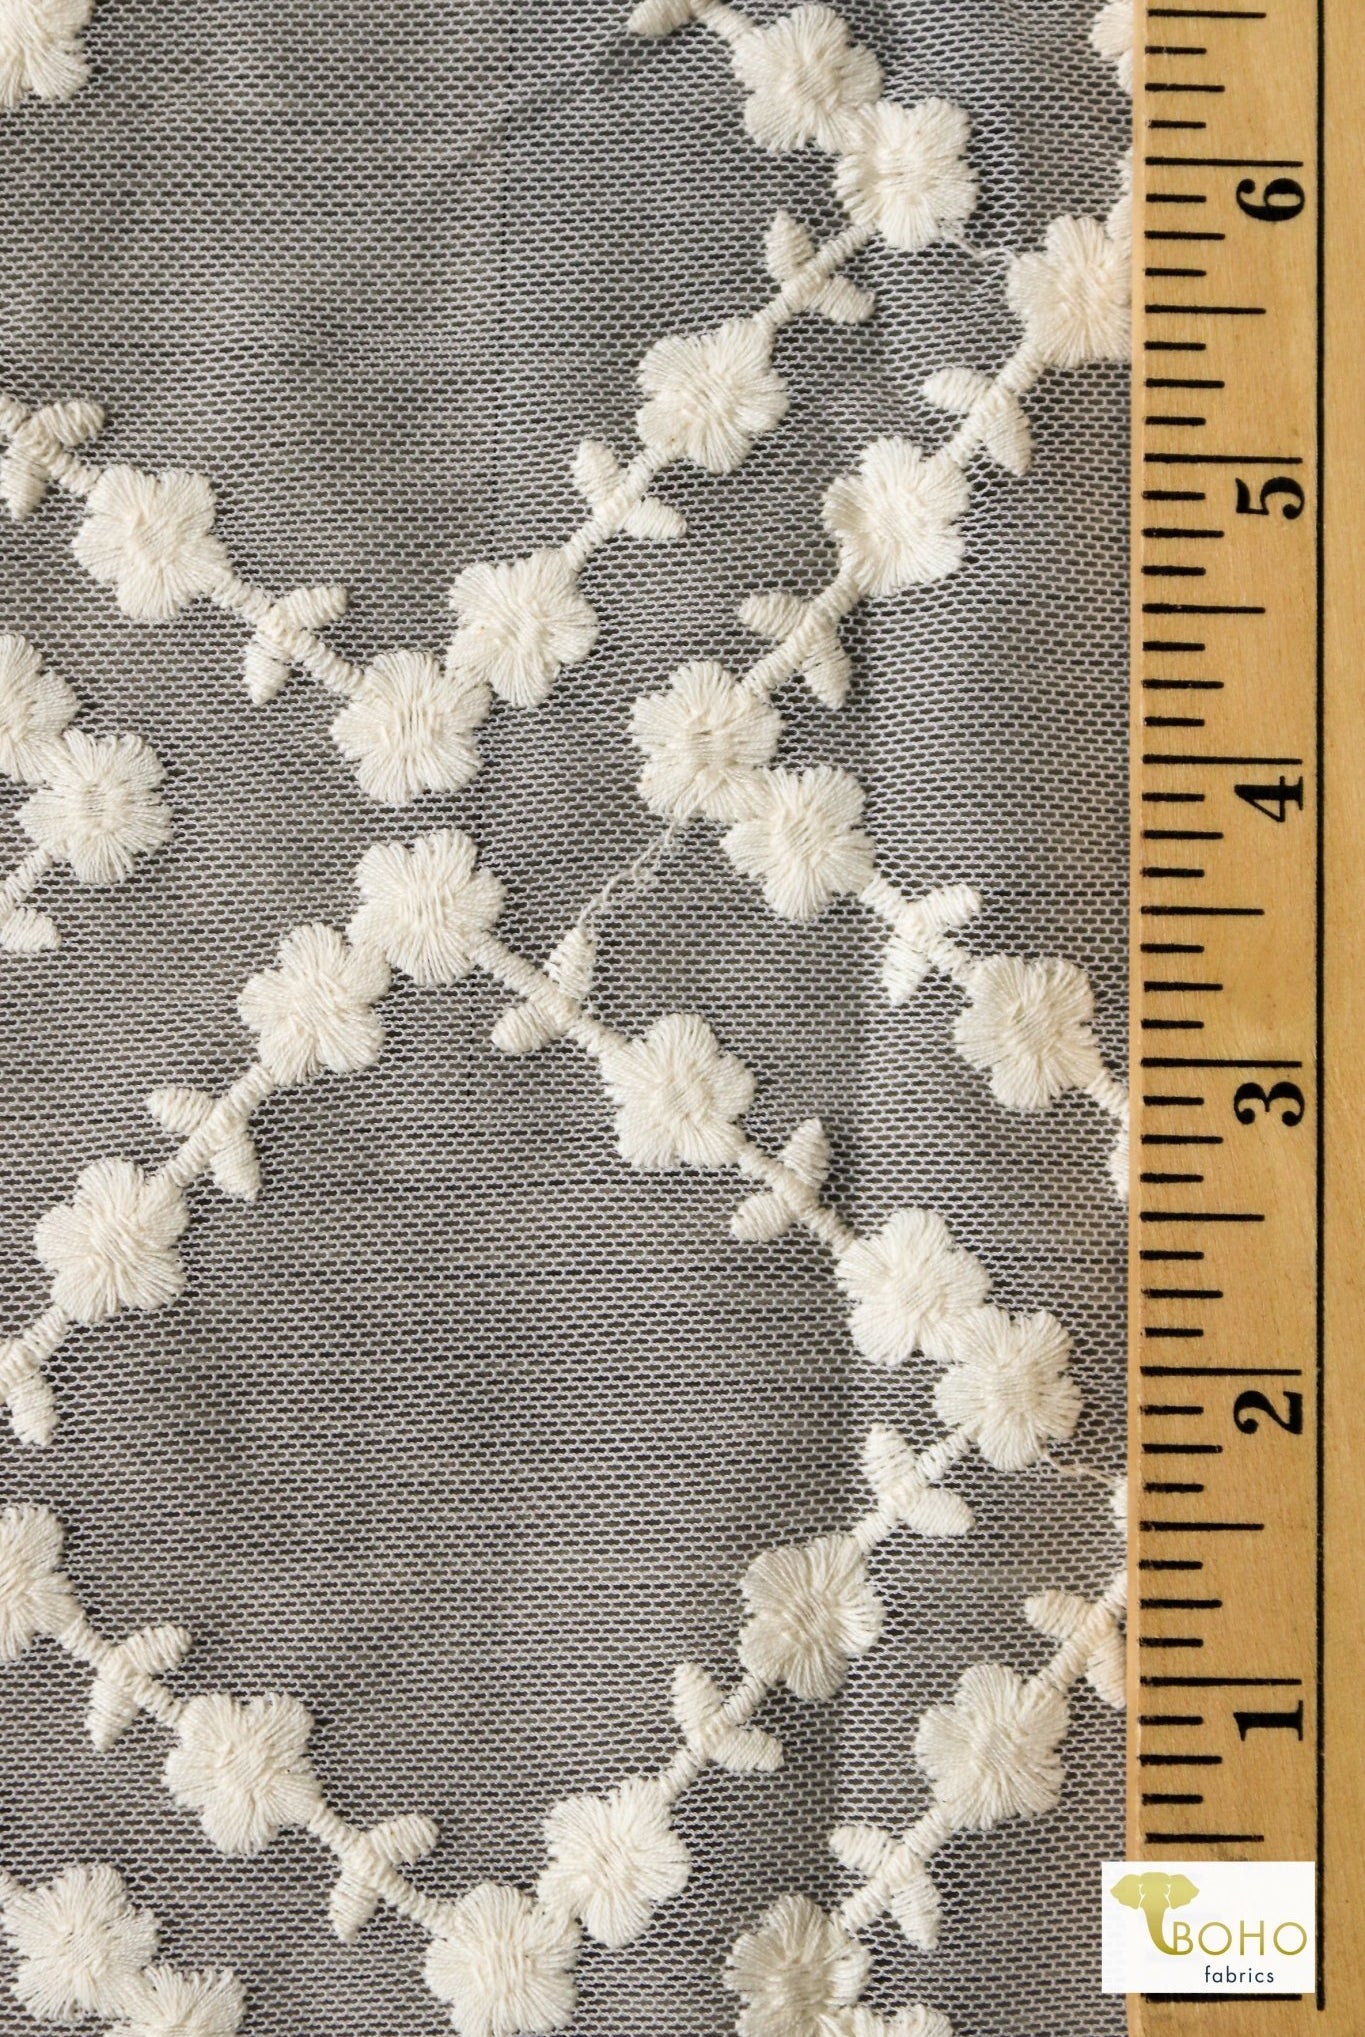 Floral Diamond Embroidery. Special Occasion Fabric. - Boho Fabrics